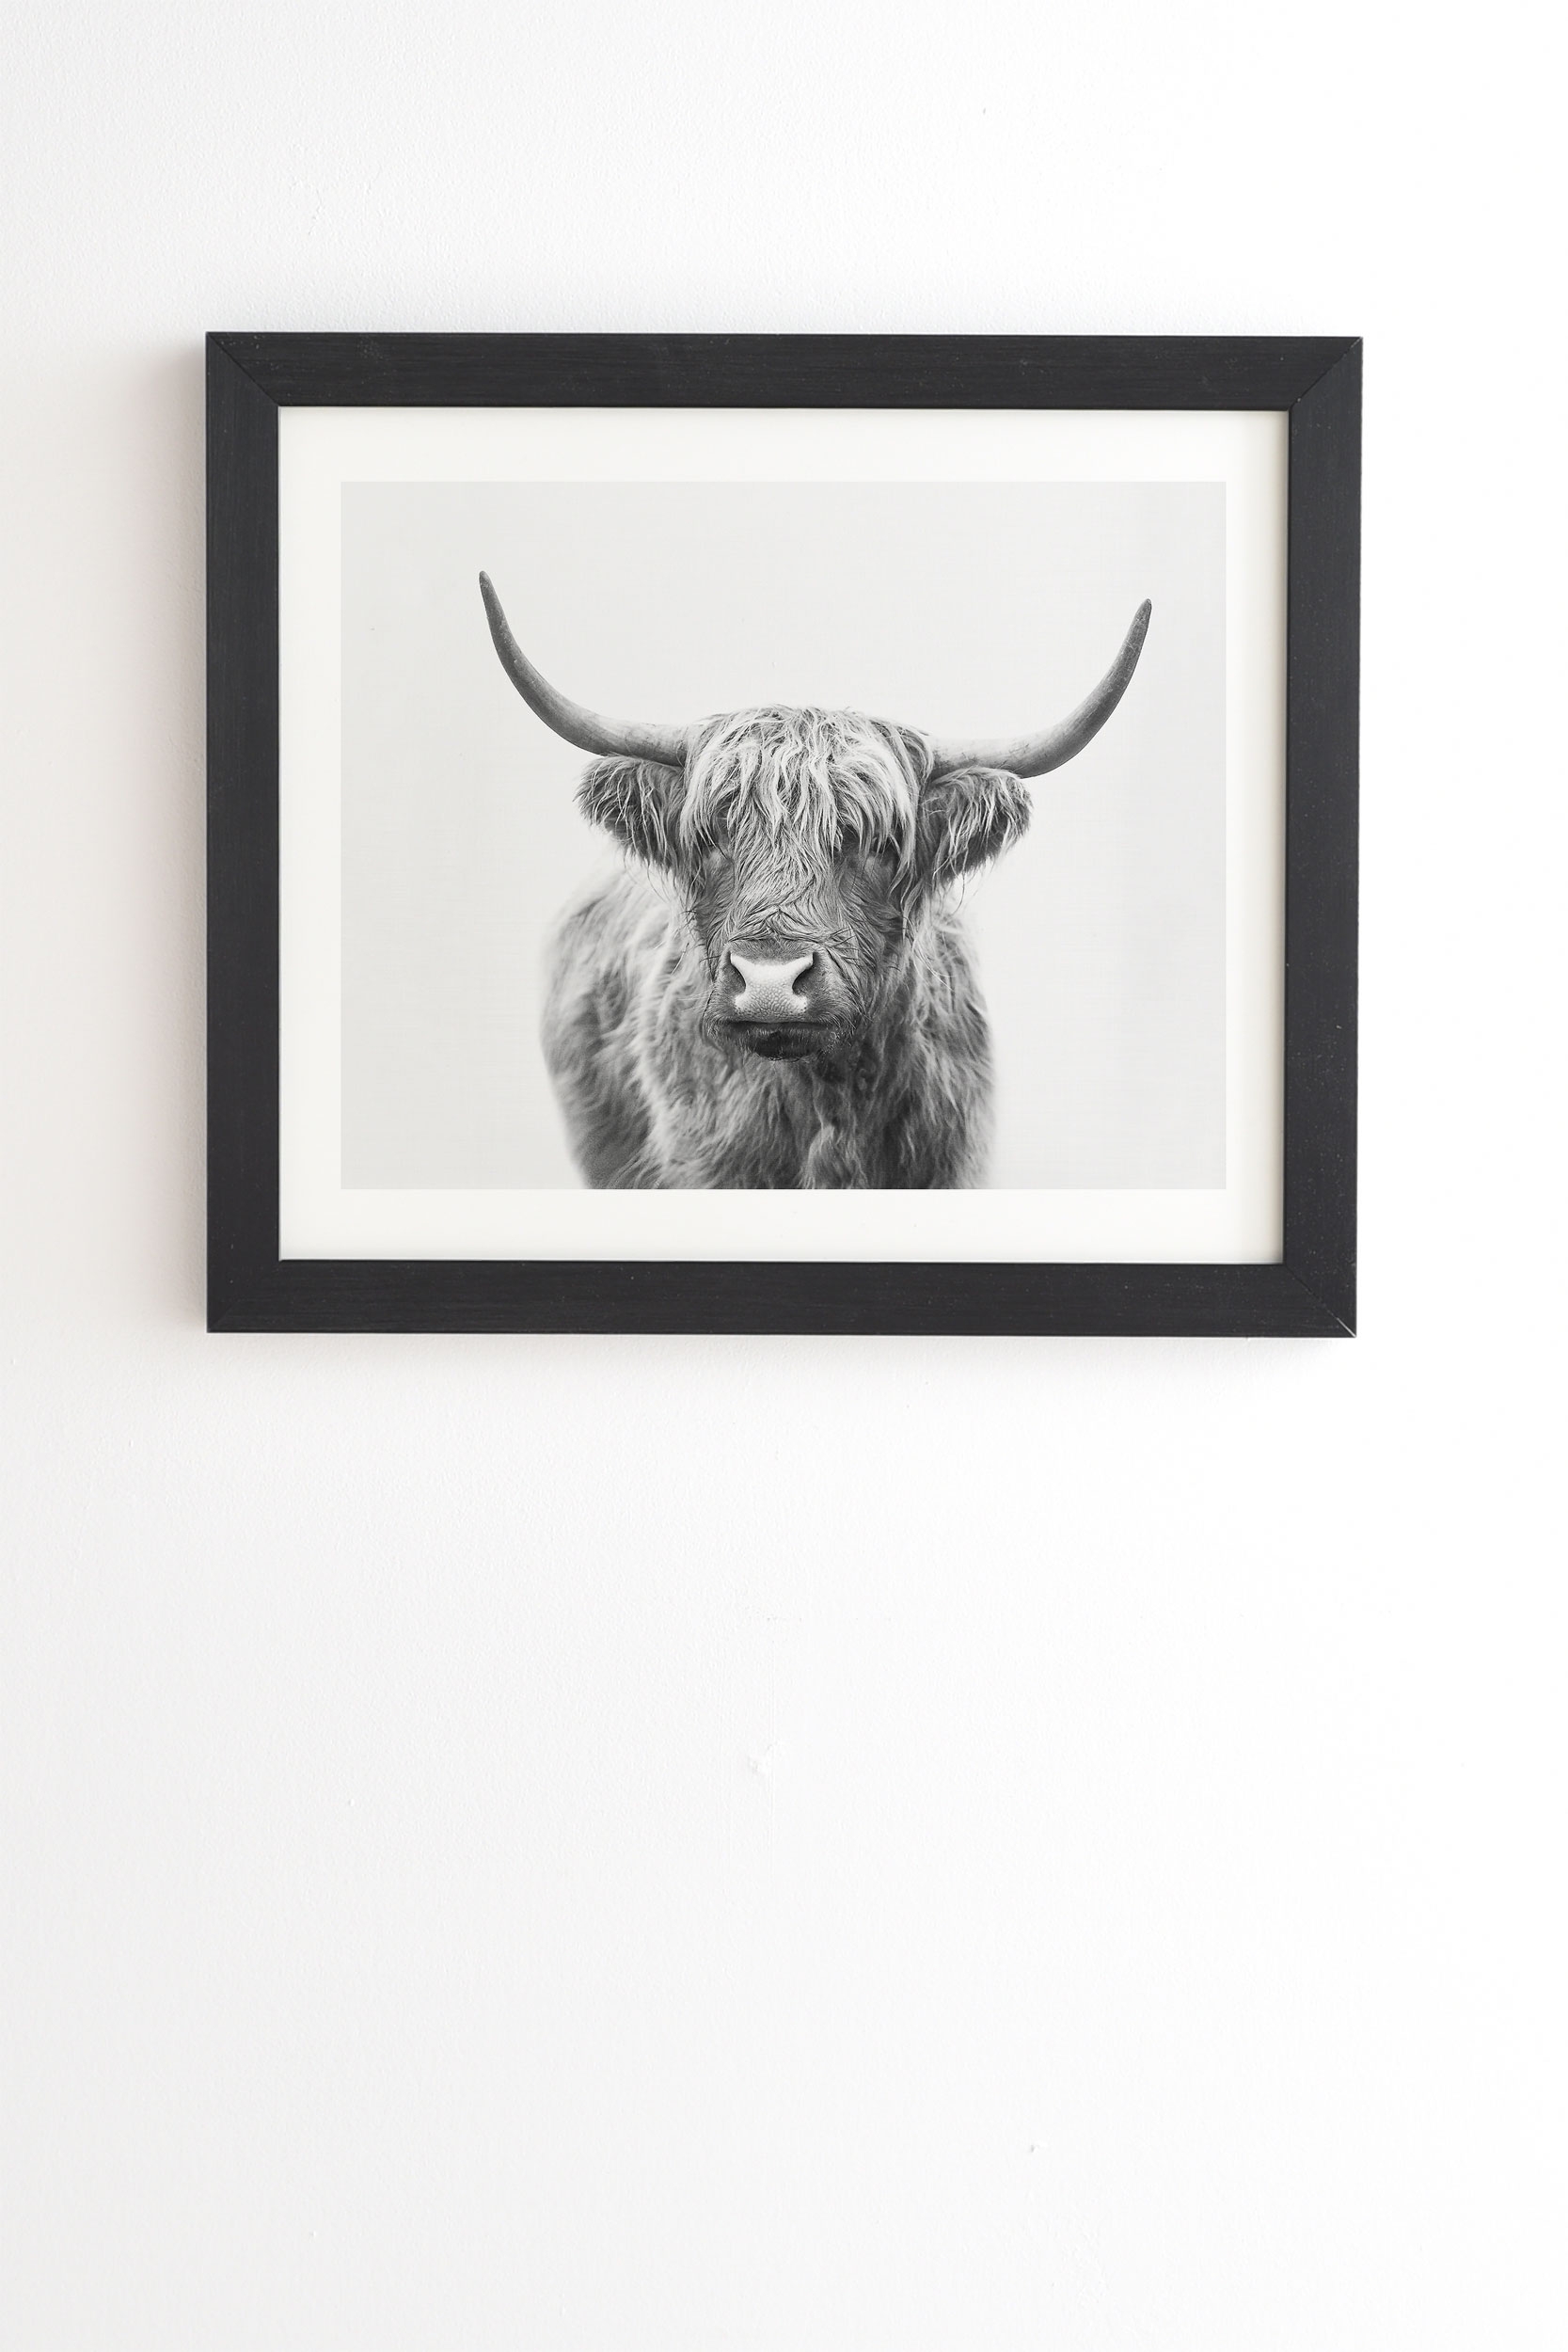 Highland Bull by Sisi and Seb - Framed Wall Art Basic Black 20" x 20" - Image 1